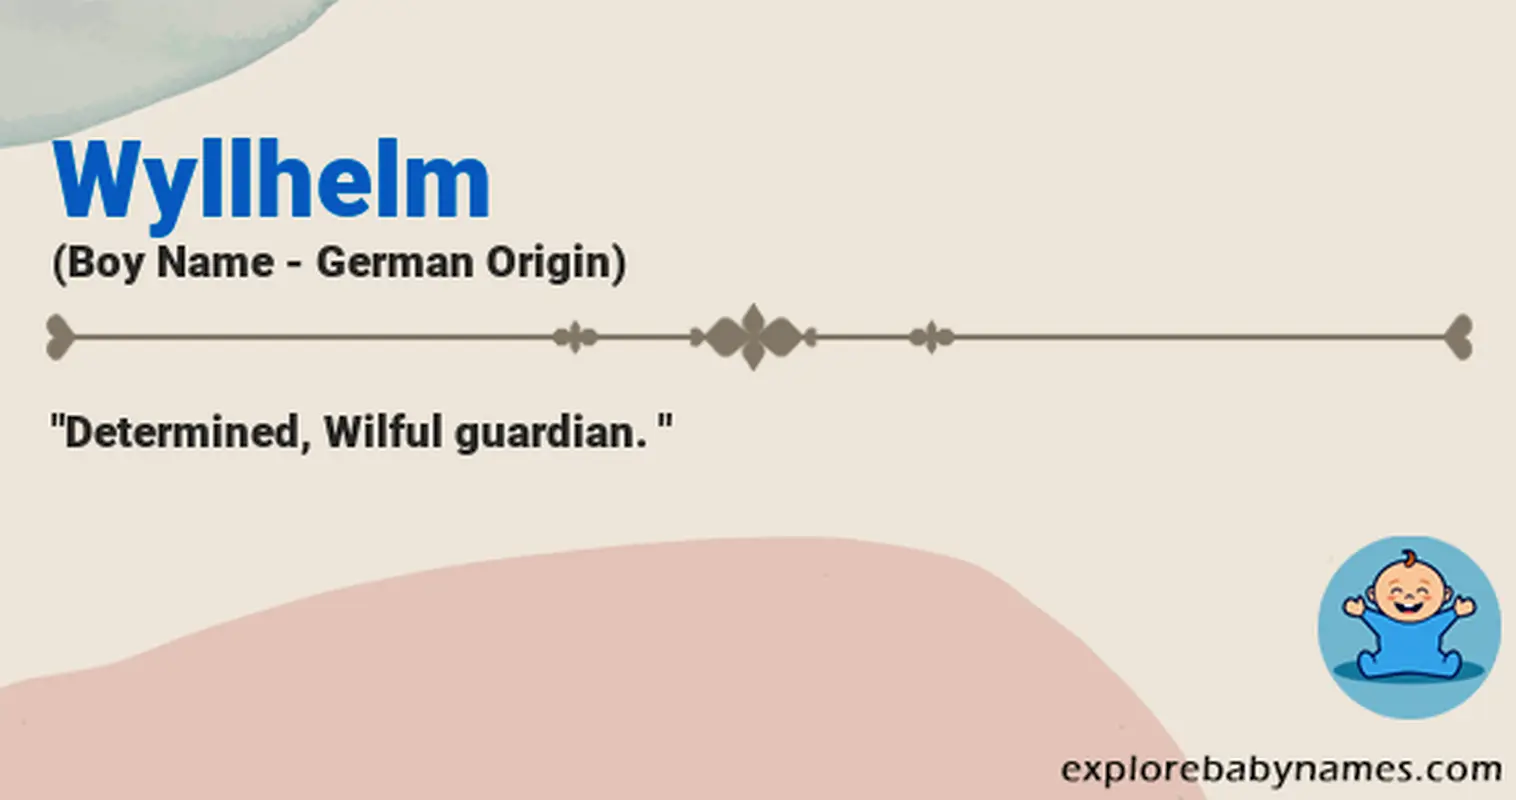 Meaning of Wyllhelm